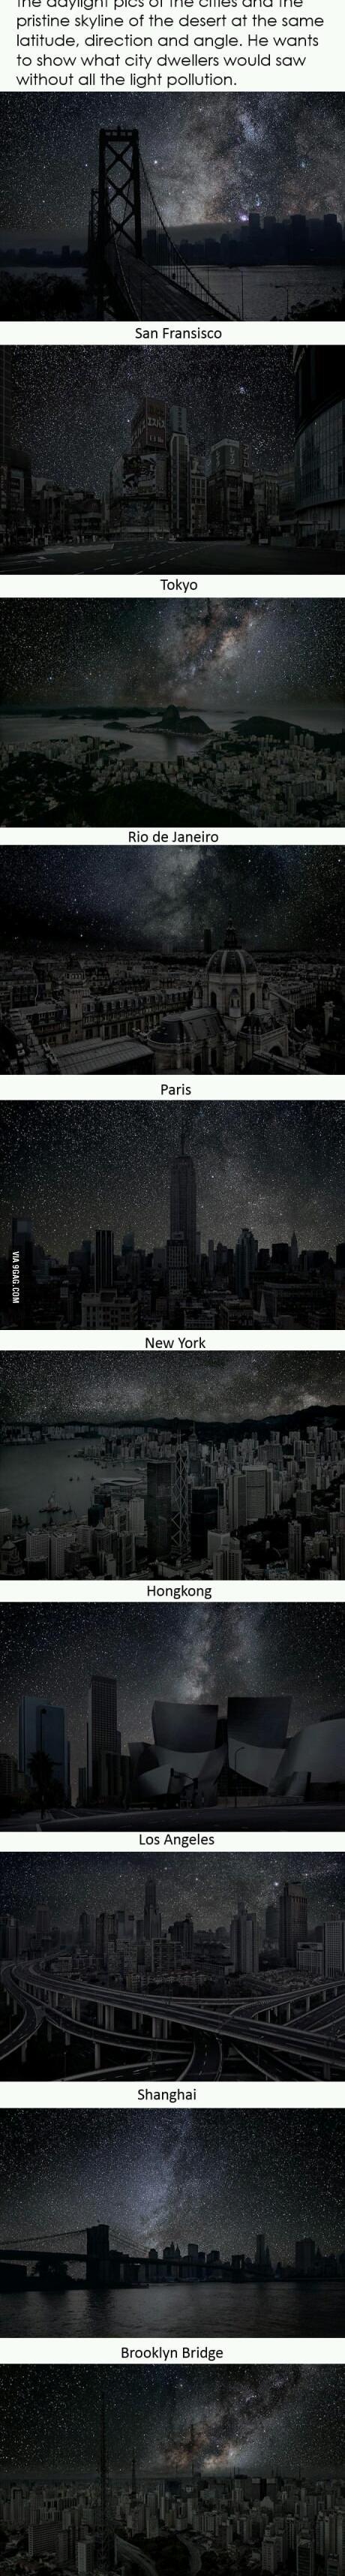 light pollution to good - meme